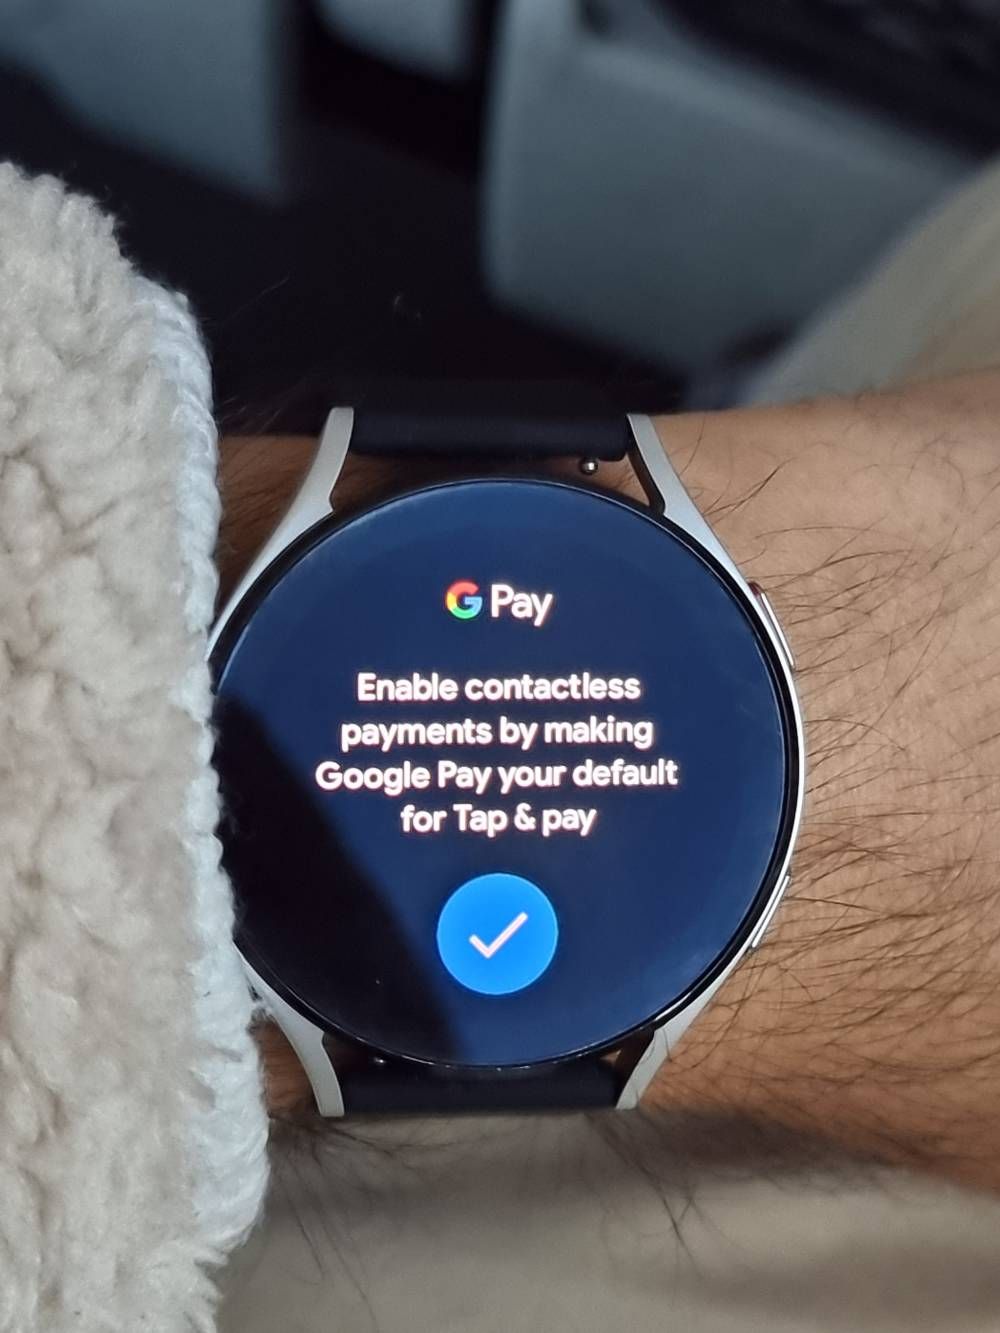 Google Pay on galaxy watch 4 not working - Samsung Community